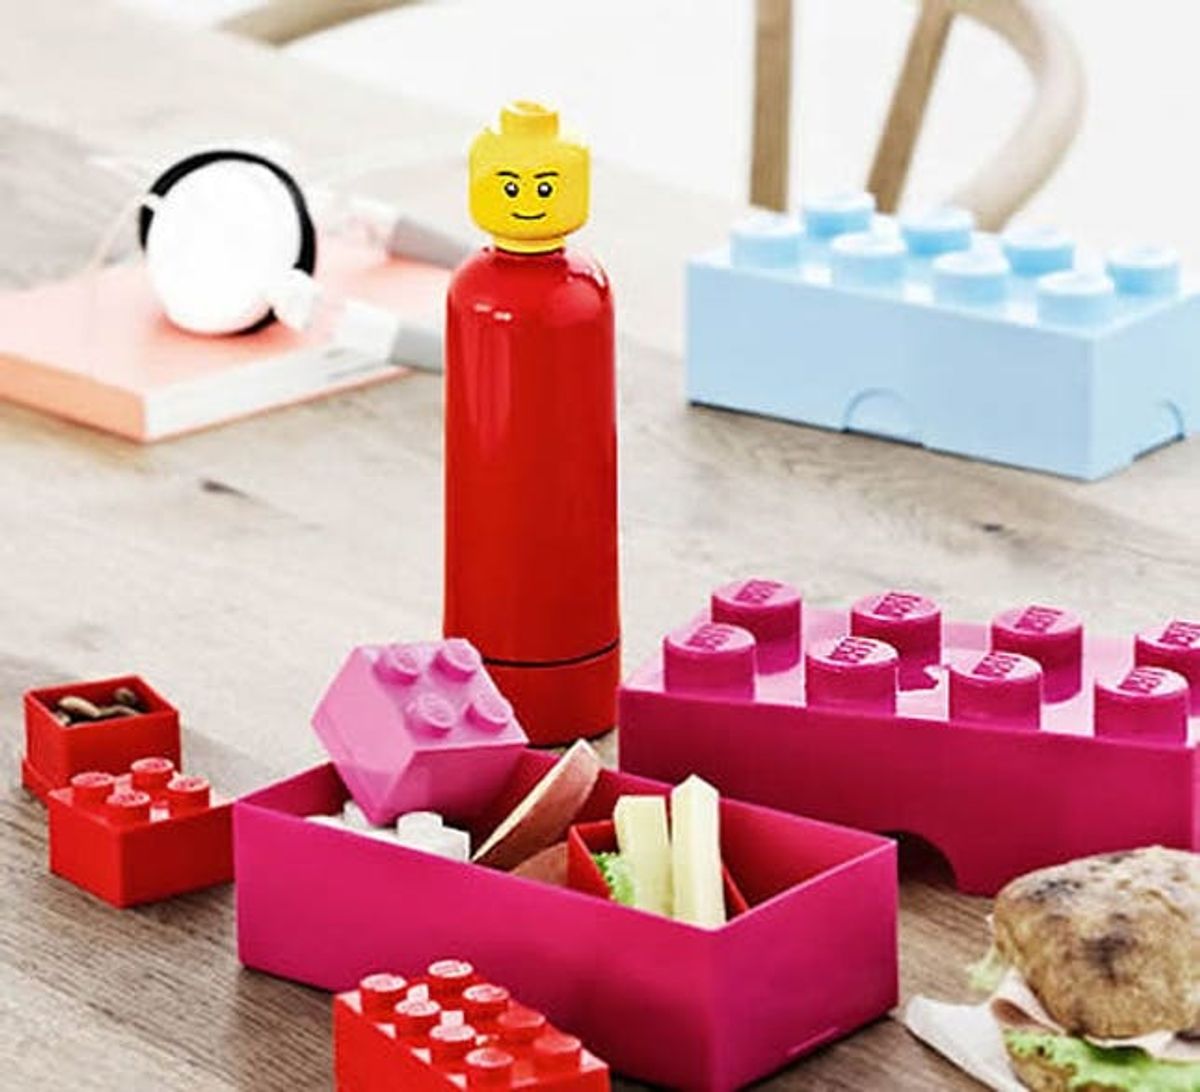 Brick by Brick: 25 Unusual Lego Products